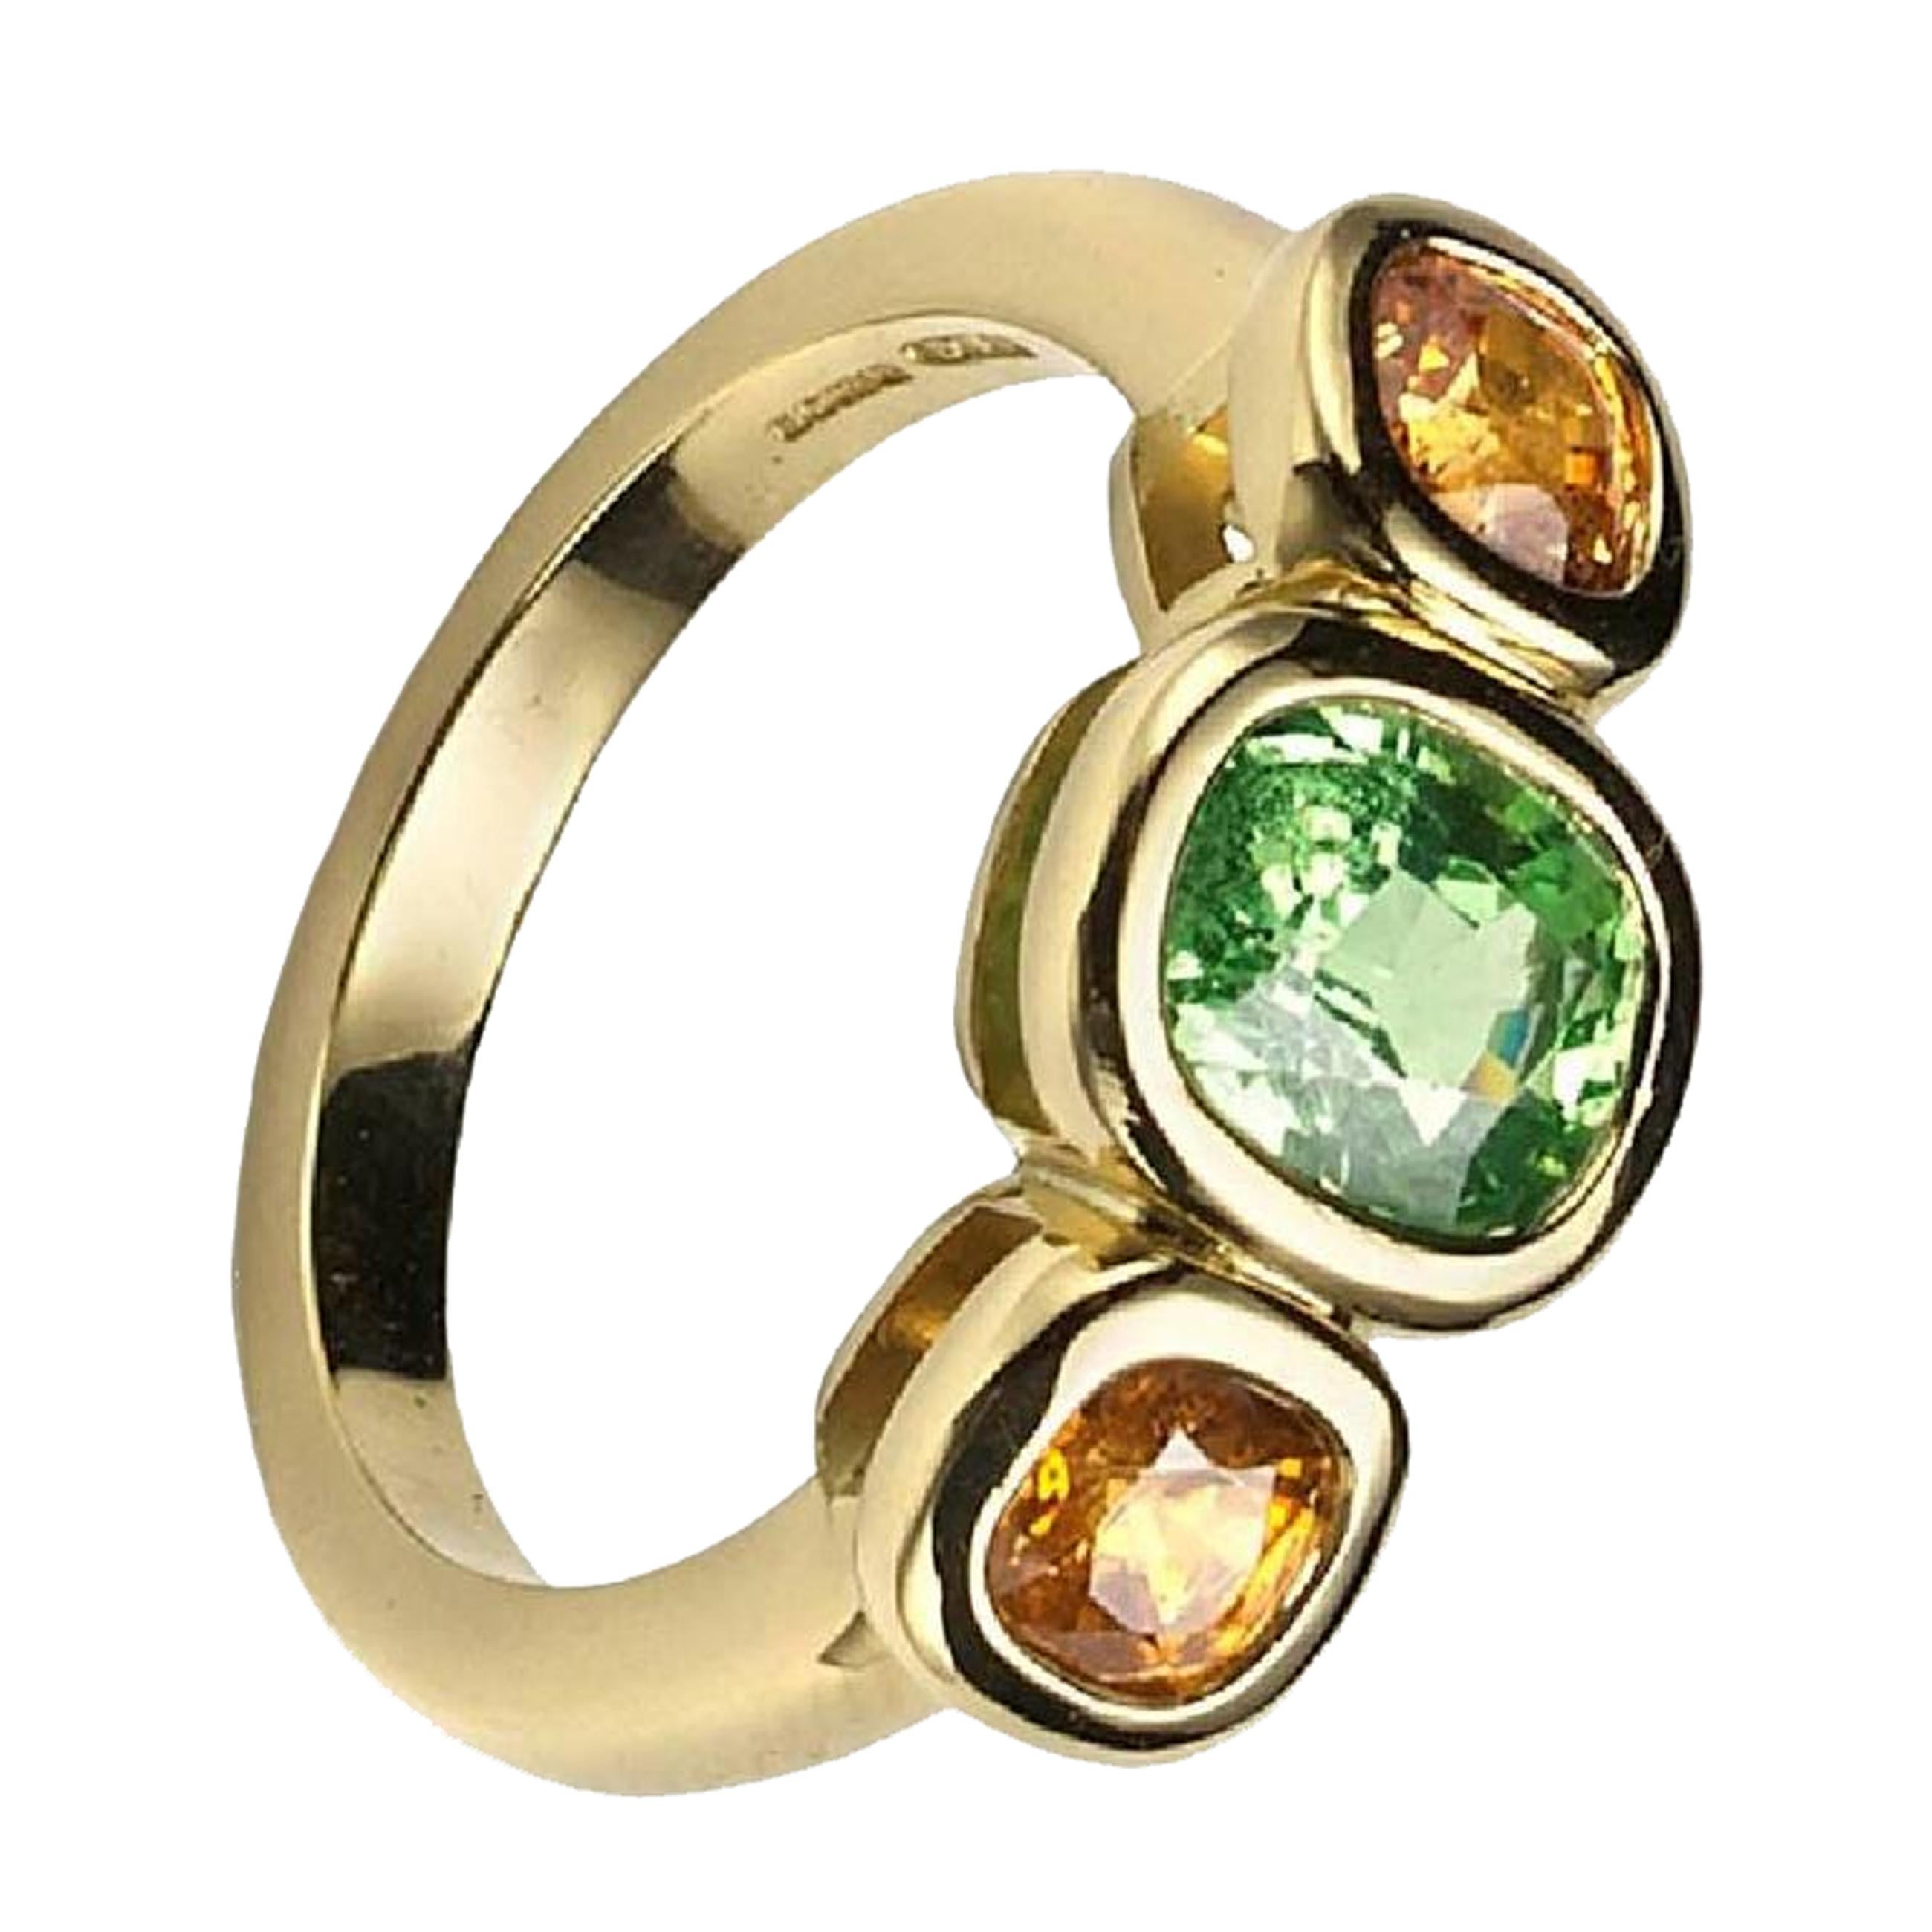 Yellow gold 18kt three stone ring set with Tsavorite and two Mandarin Garnets.
Ring size:  M
Stones:  tsavorite 7.04 x 5.3 mm, garnets 4.27mm diameter